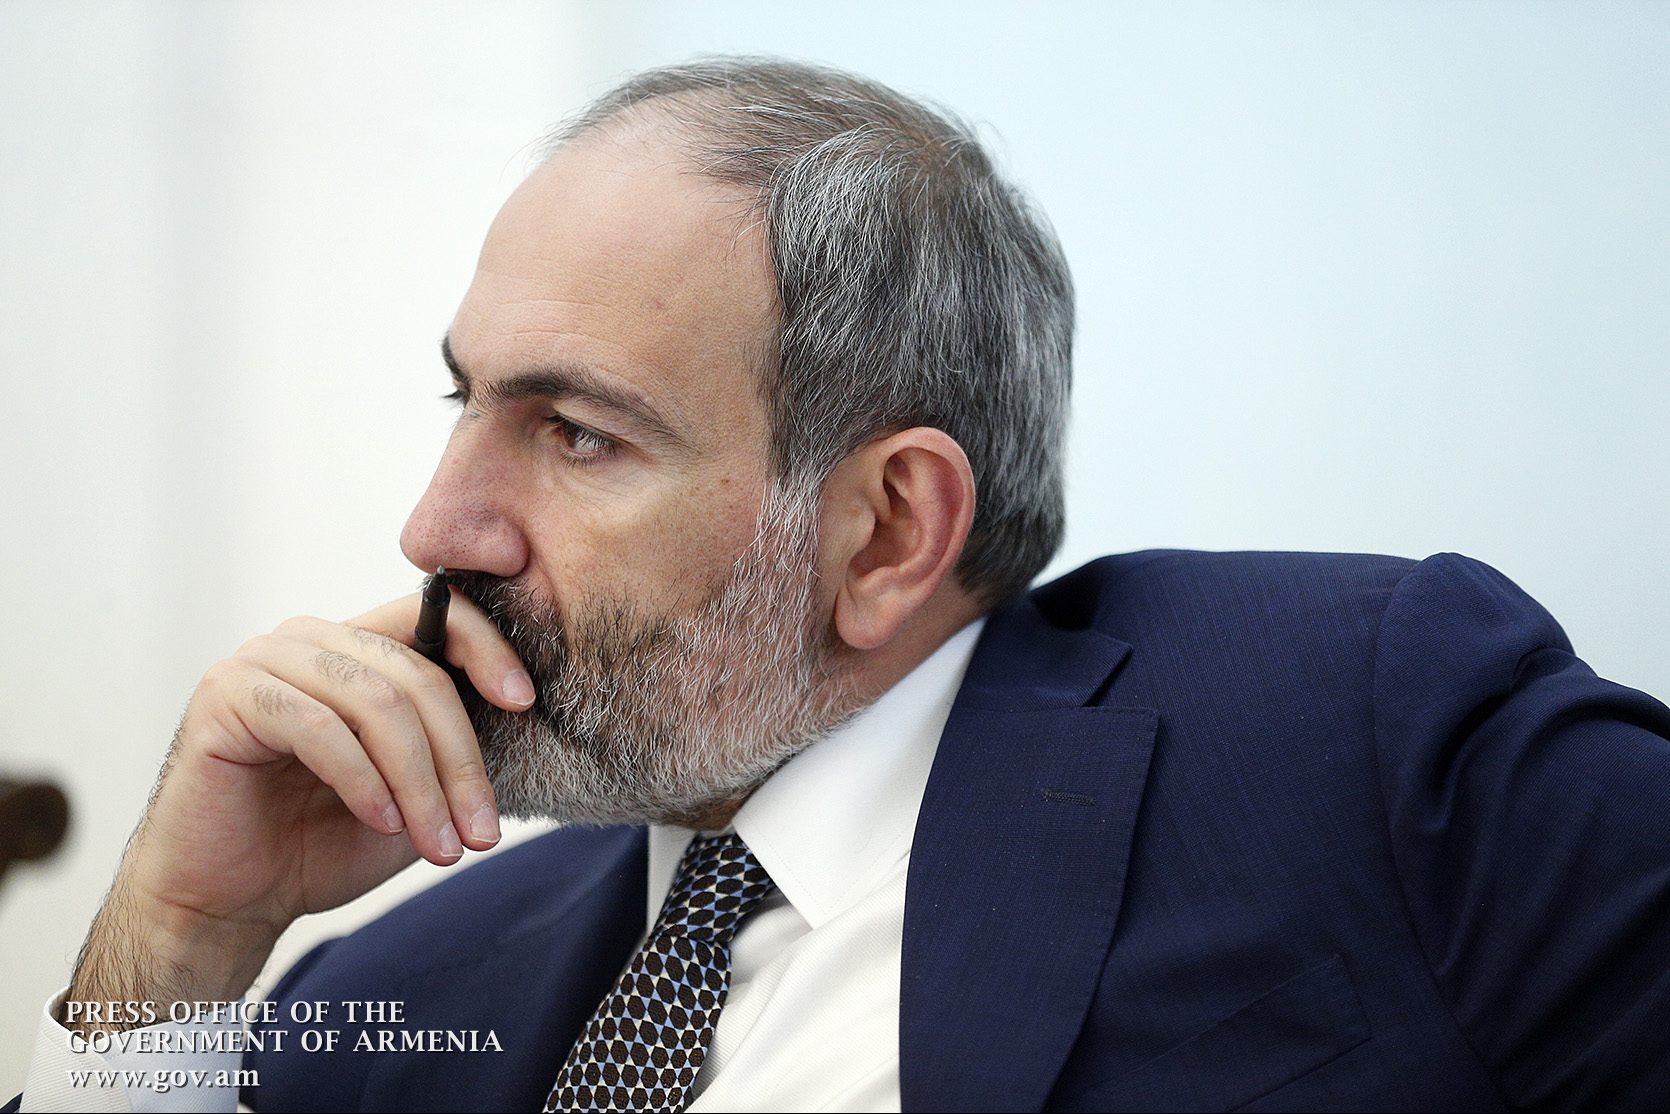 Preparing for concessions on Karabakh